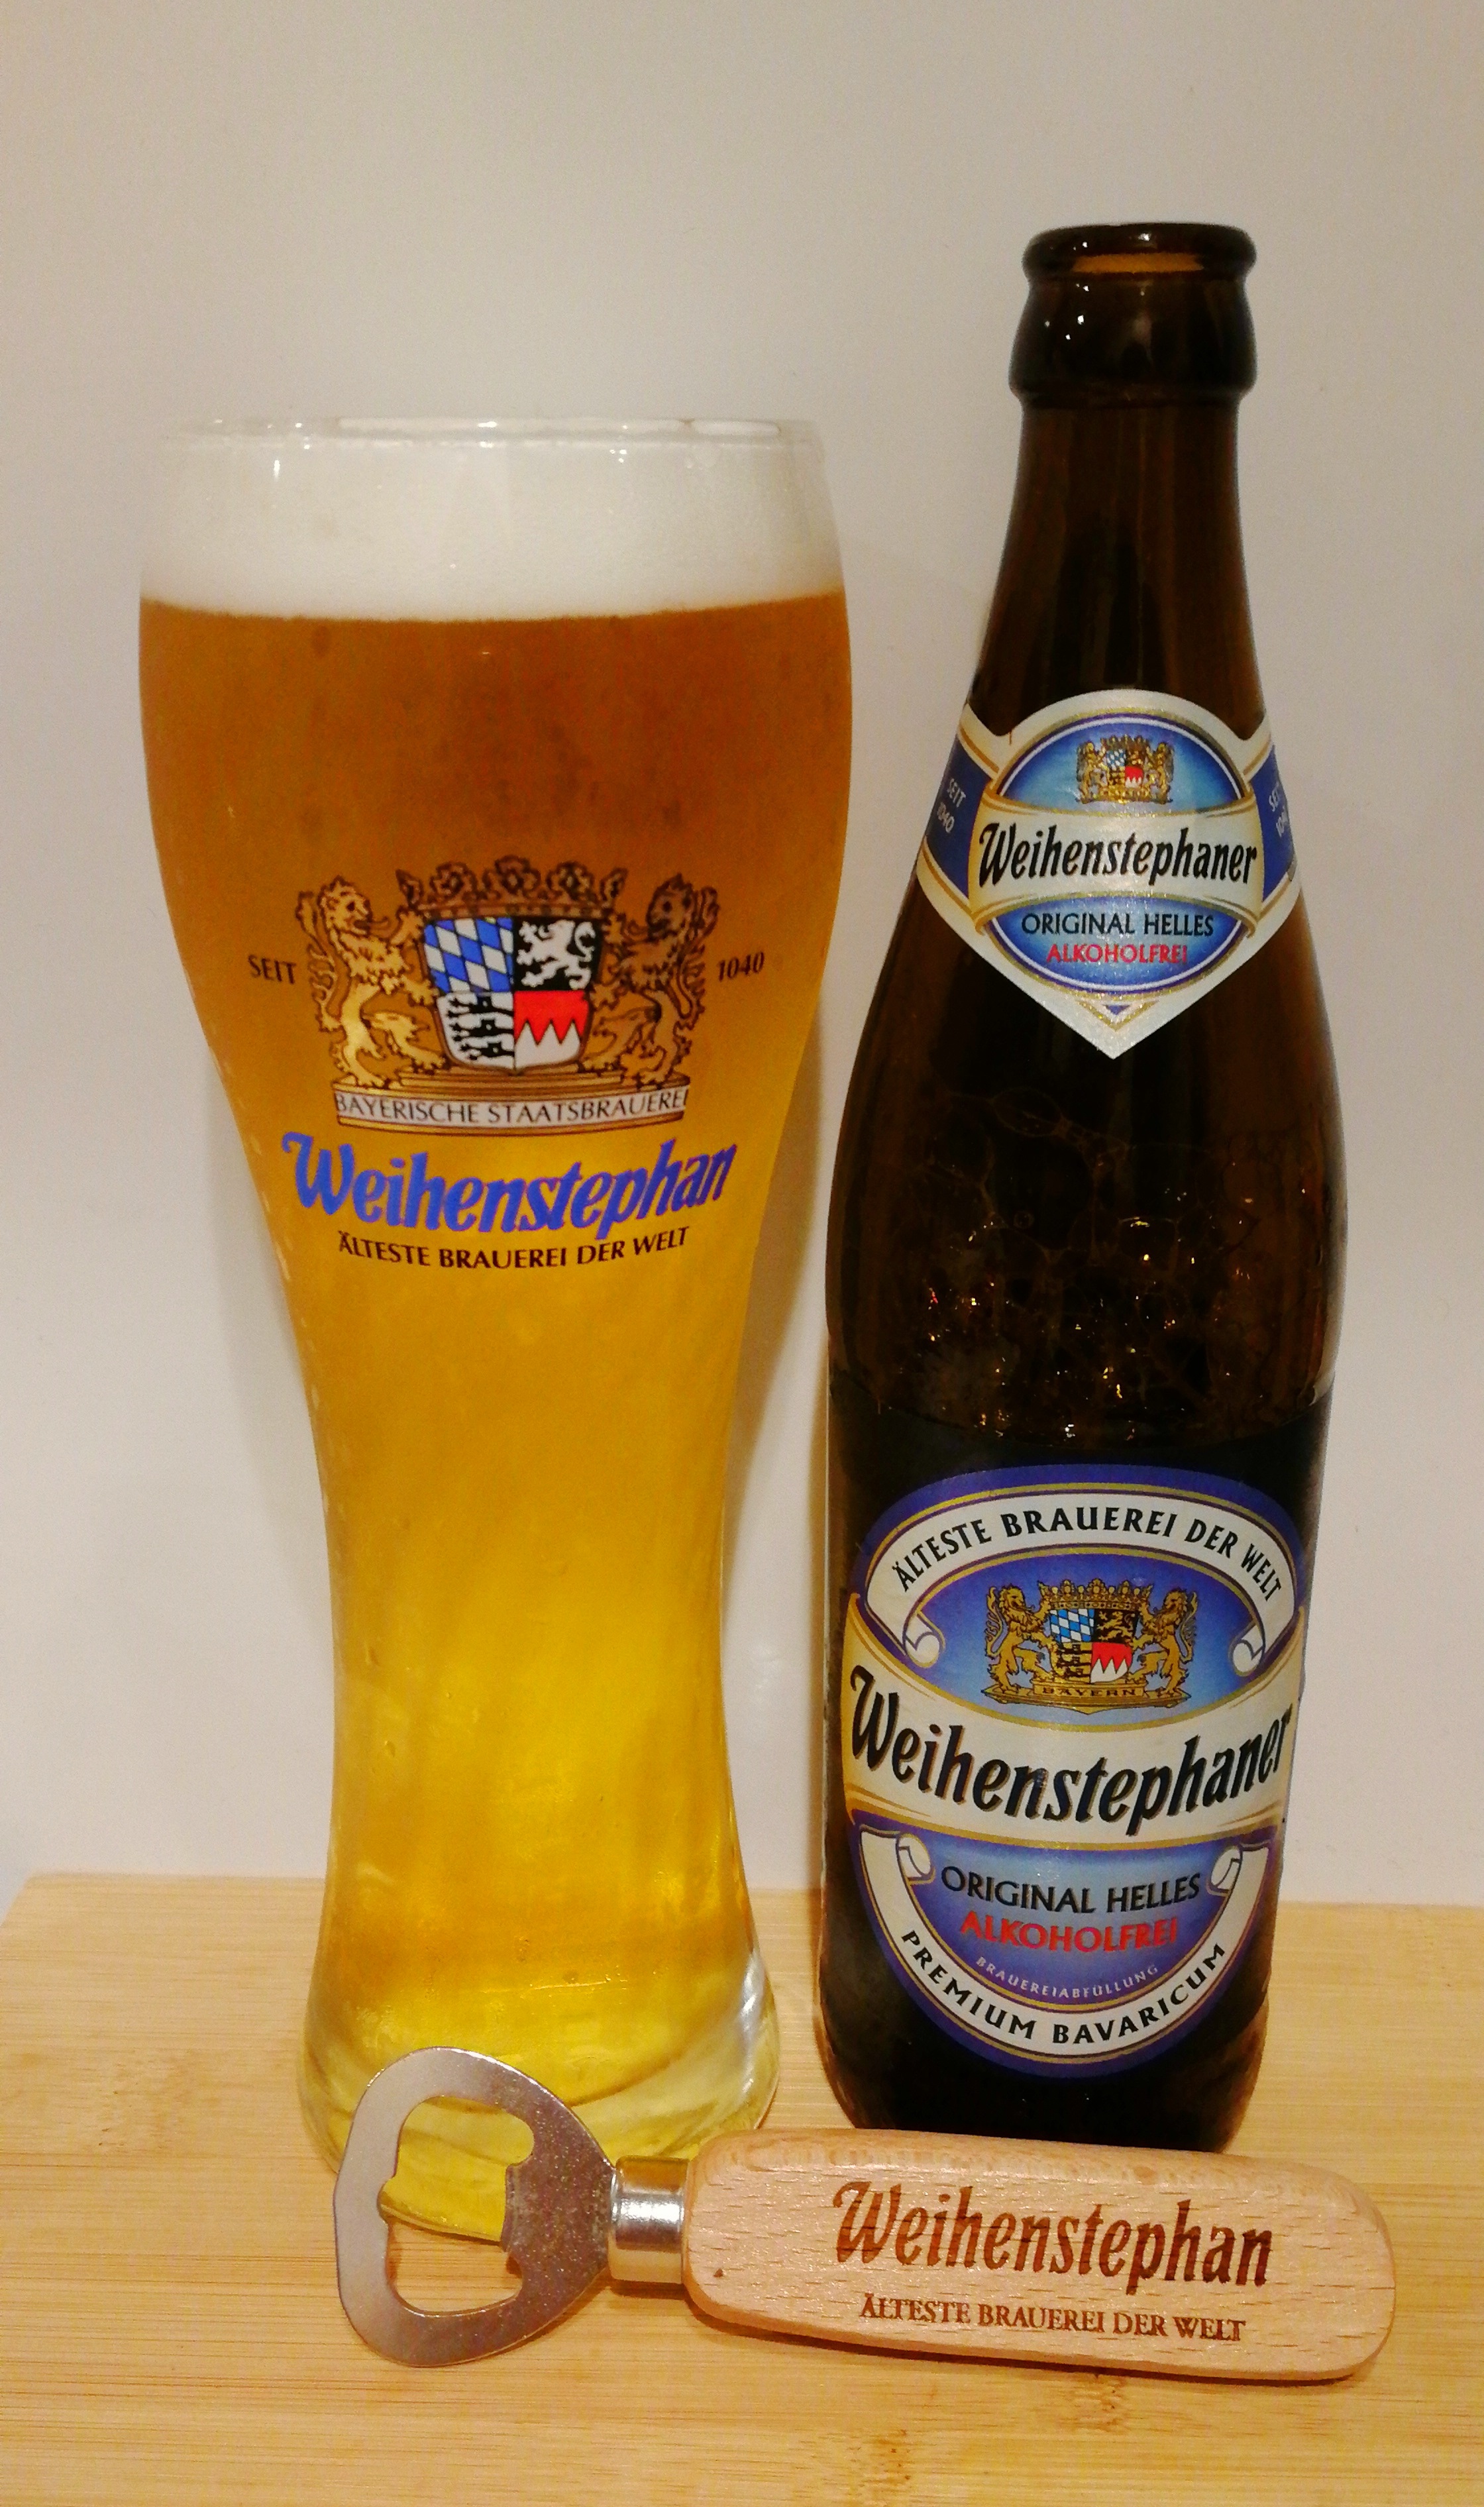 Weihenstephan ORIGINAL HELLES ALKOHOLFREI　ヴァイエンシュテファン オリジナル へレス アルコールフライ